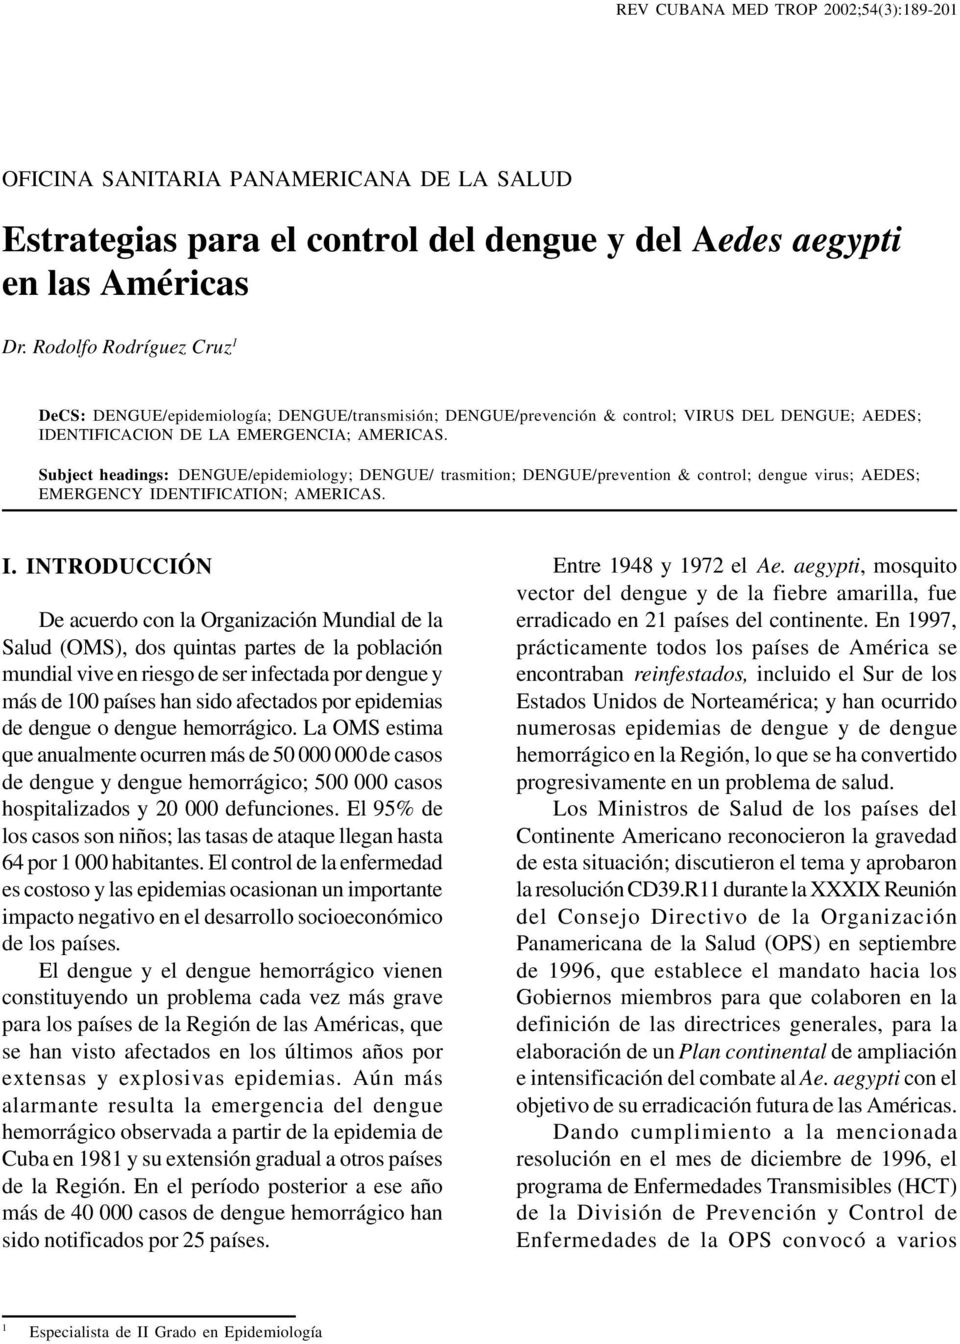 Subject headings: DENGUE/epidemiology; DENGUE/ trasmition; DENGUE/prevention & control; dengue virus; AEDES; EMERGENCY ID